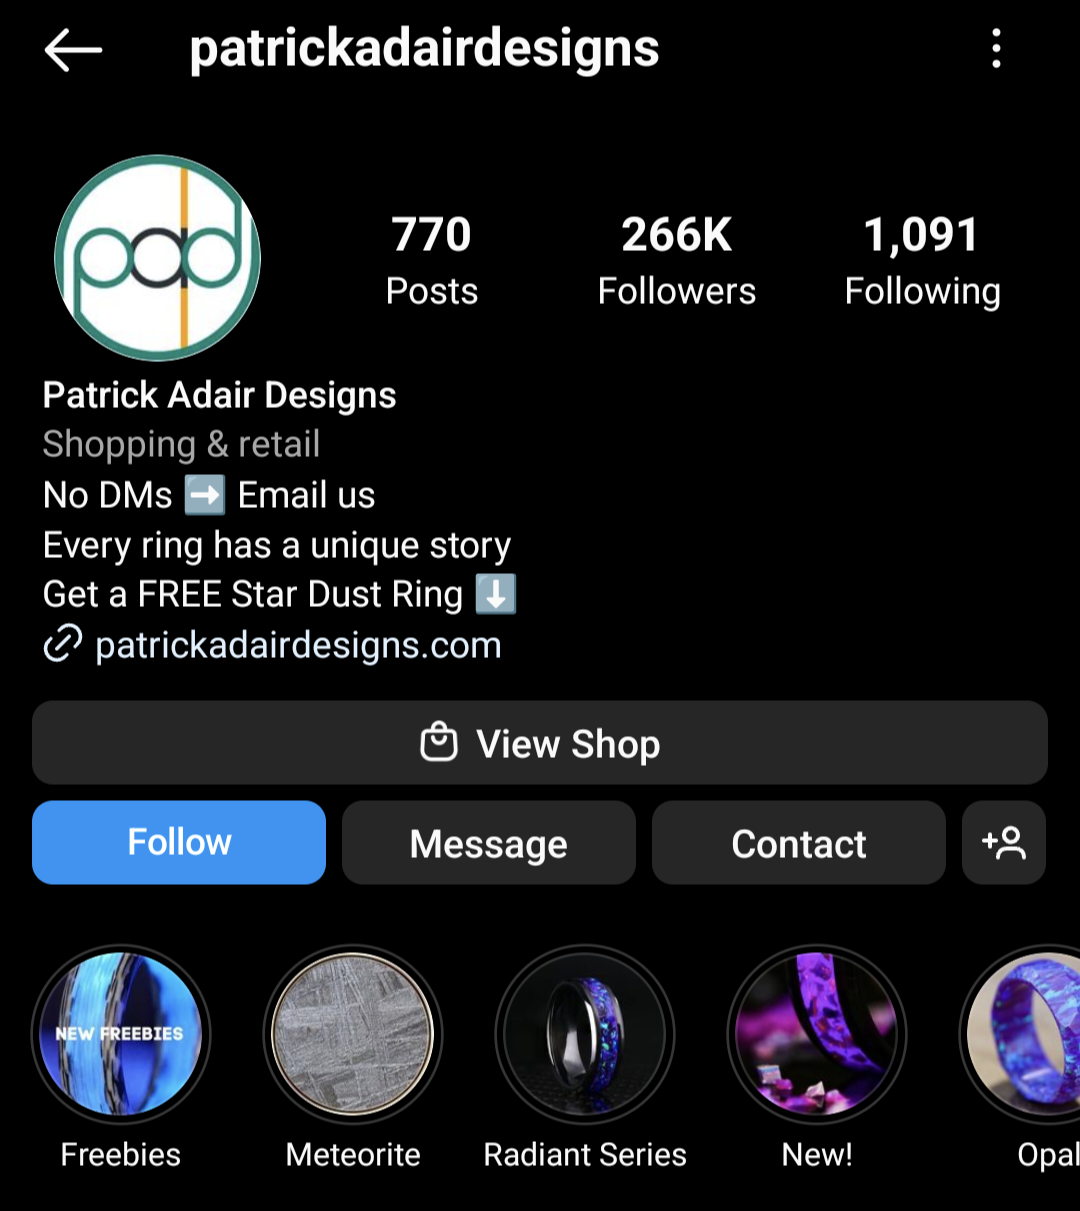 Designer Patrick Adair's Instagram bio uses emojis to direct users to links